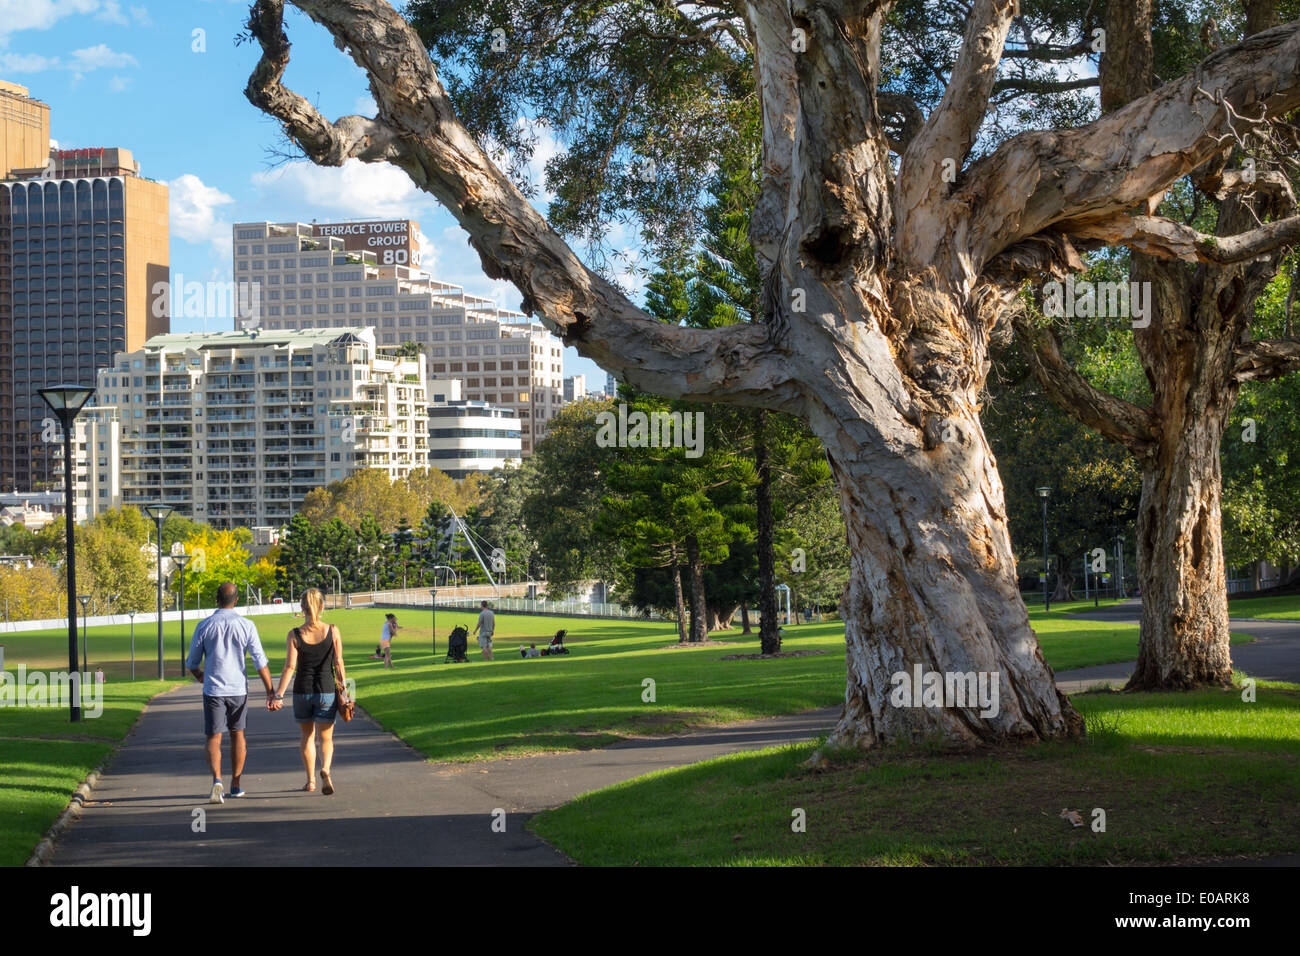 Sydney Australia,Royal Botanic Gardens,The Domain,urban,park,lawn,trees,man men male,woman female women,couple,walking,AU140309208 Stock Photo